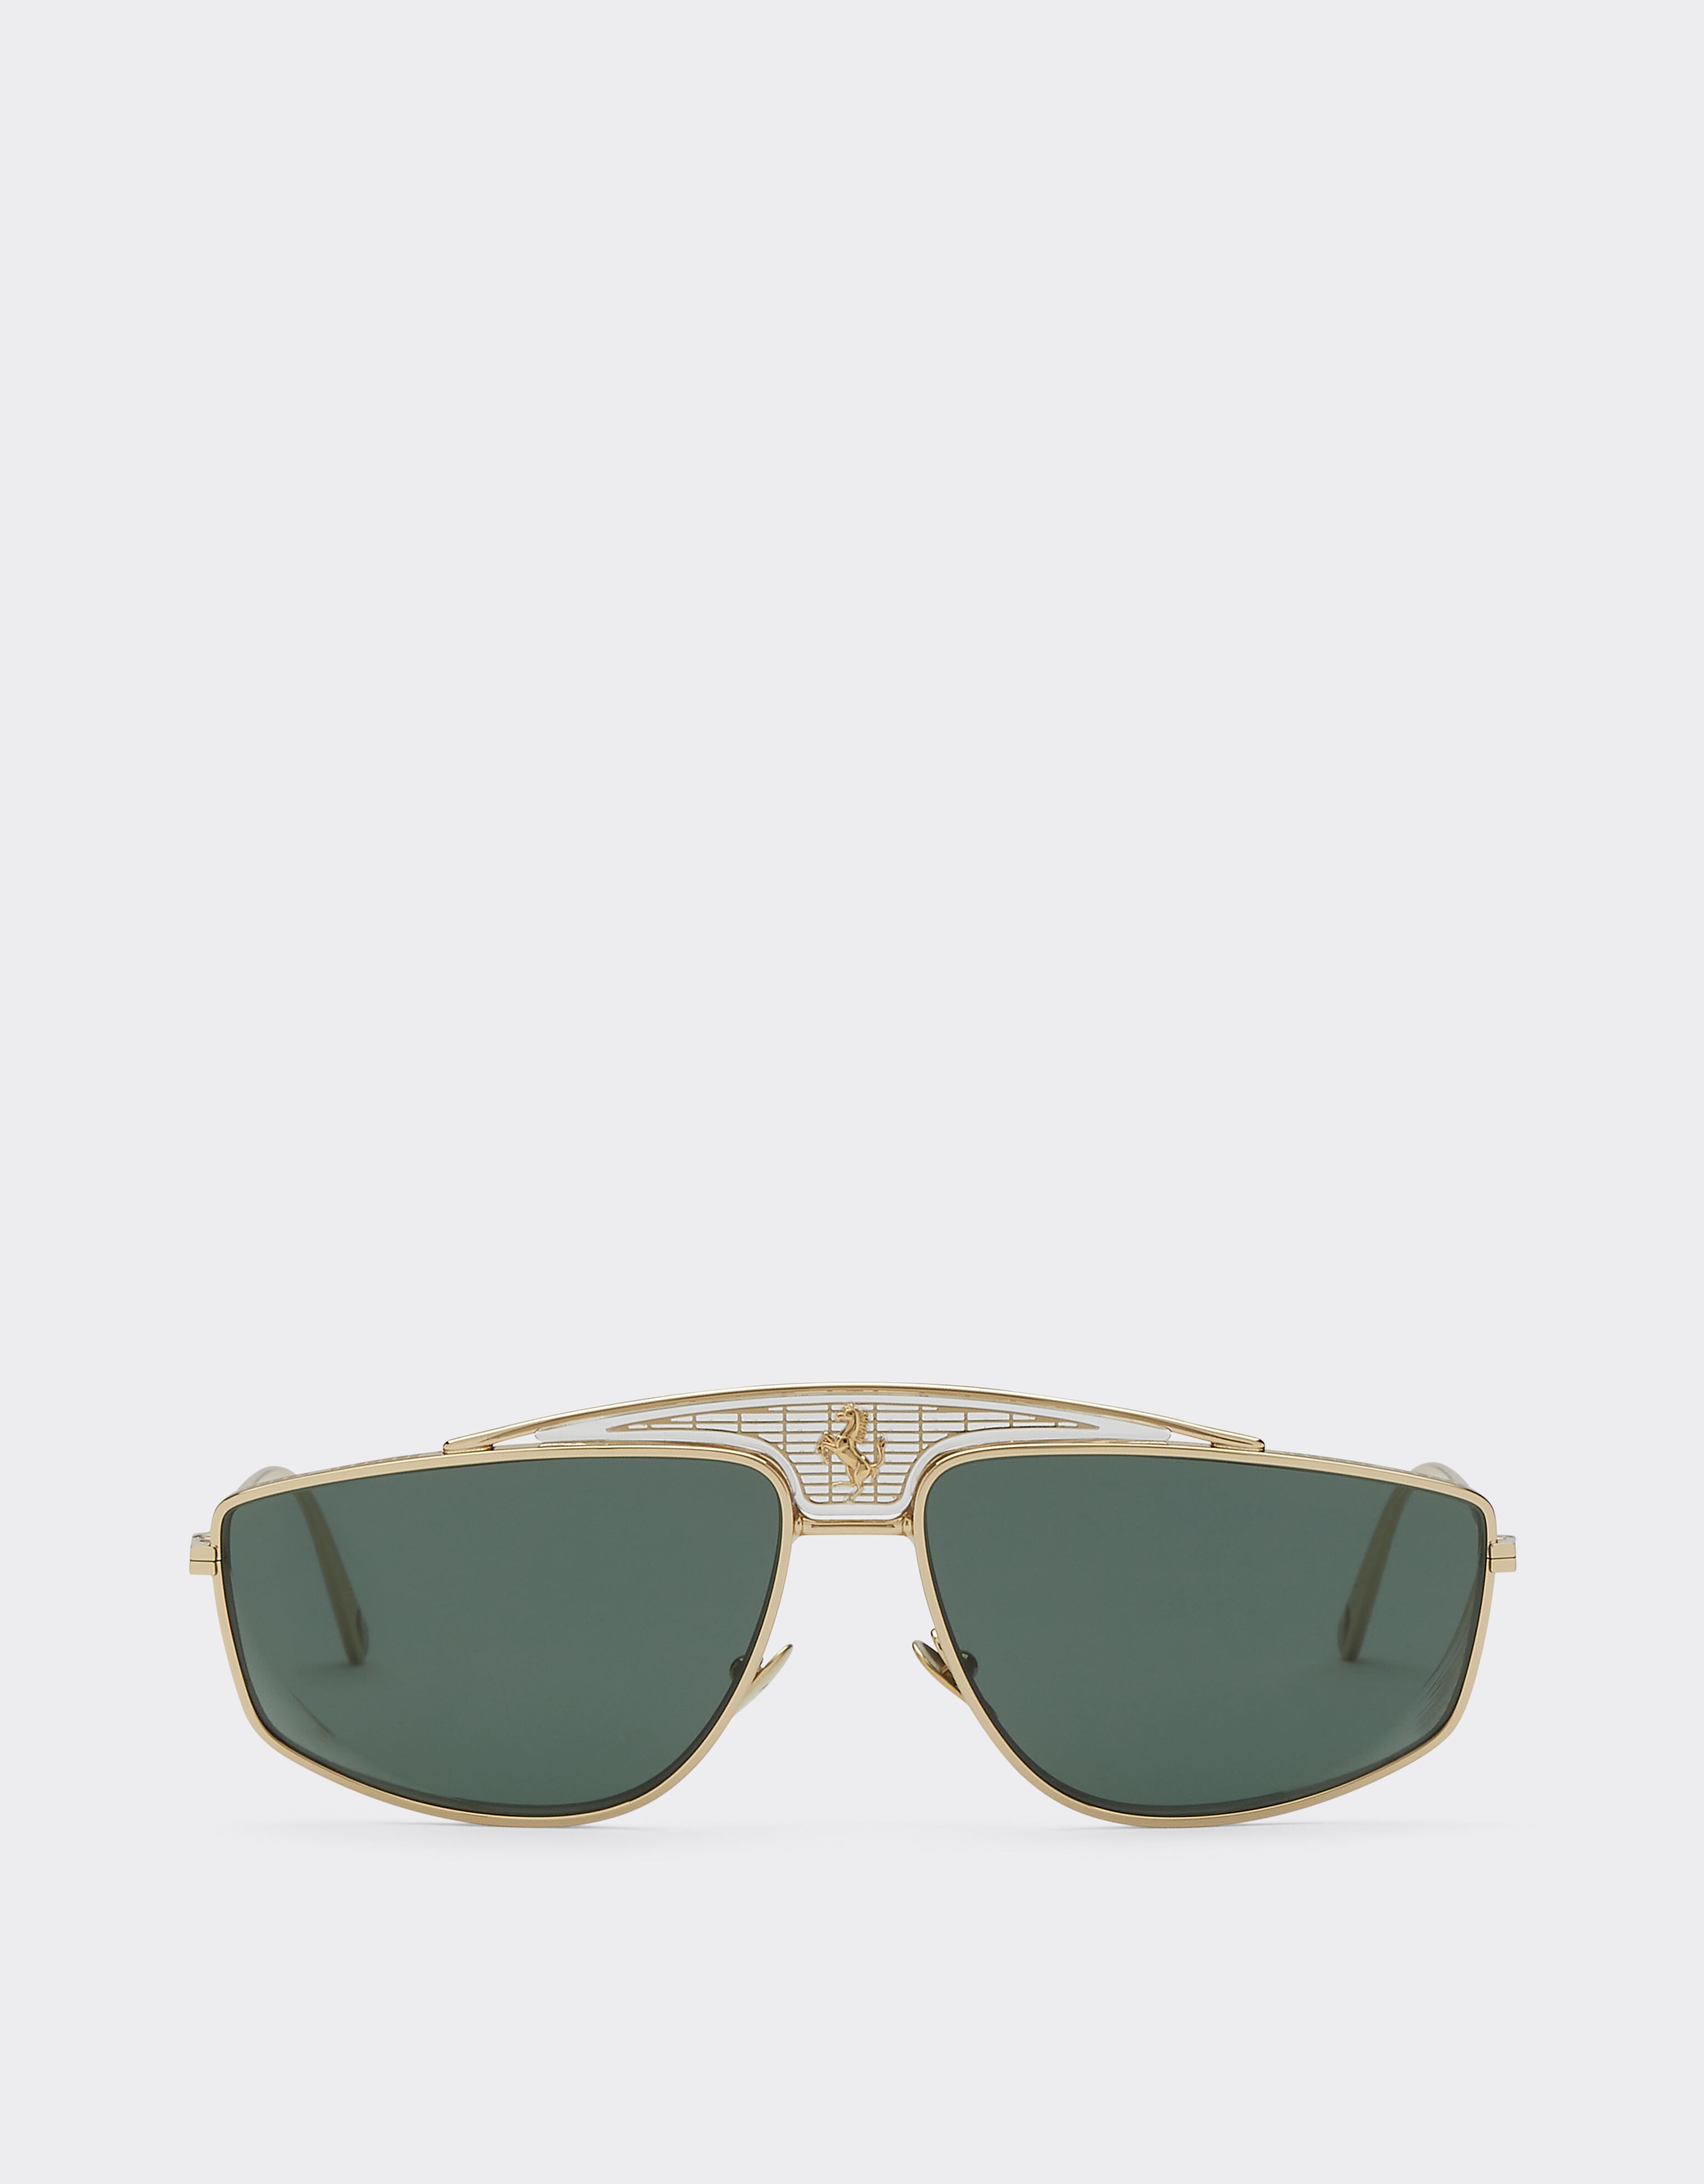 Ferrari Ferrari sunglasses with dark green lenses Silver F1248f